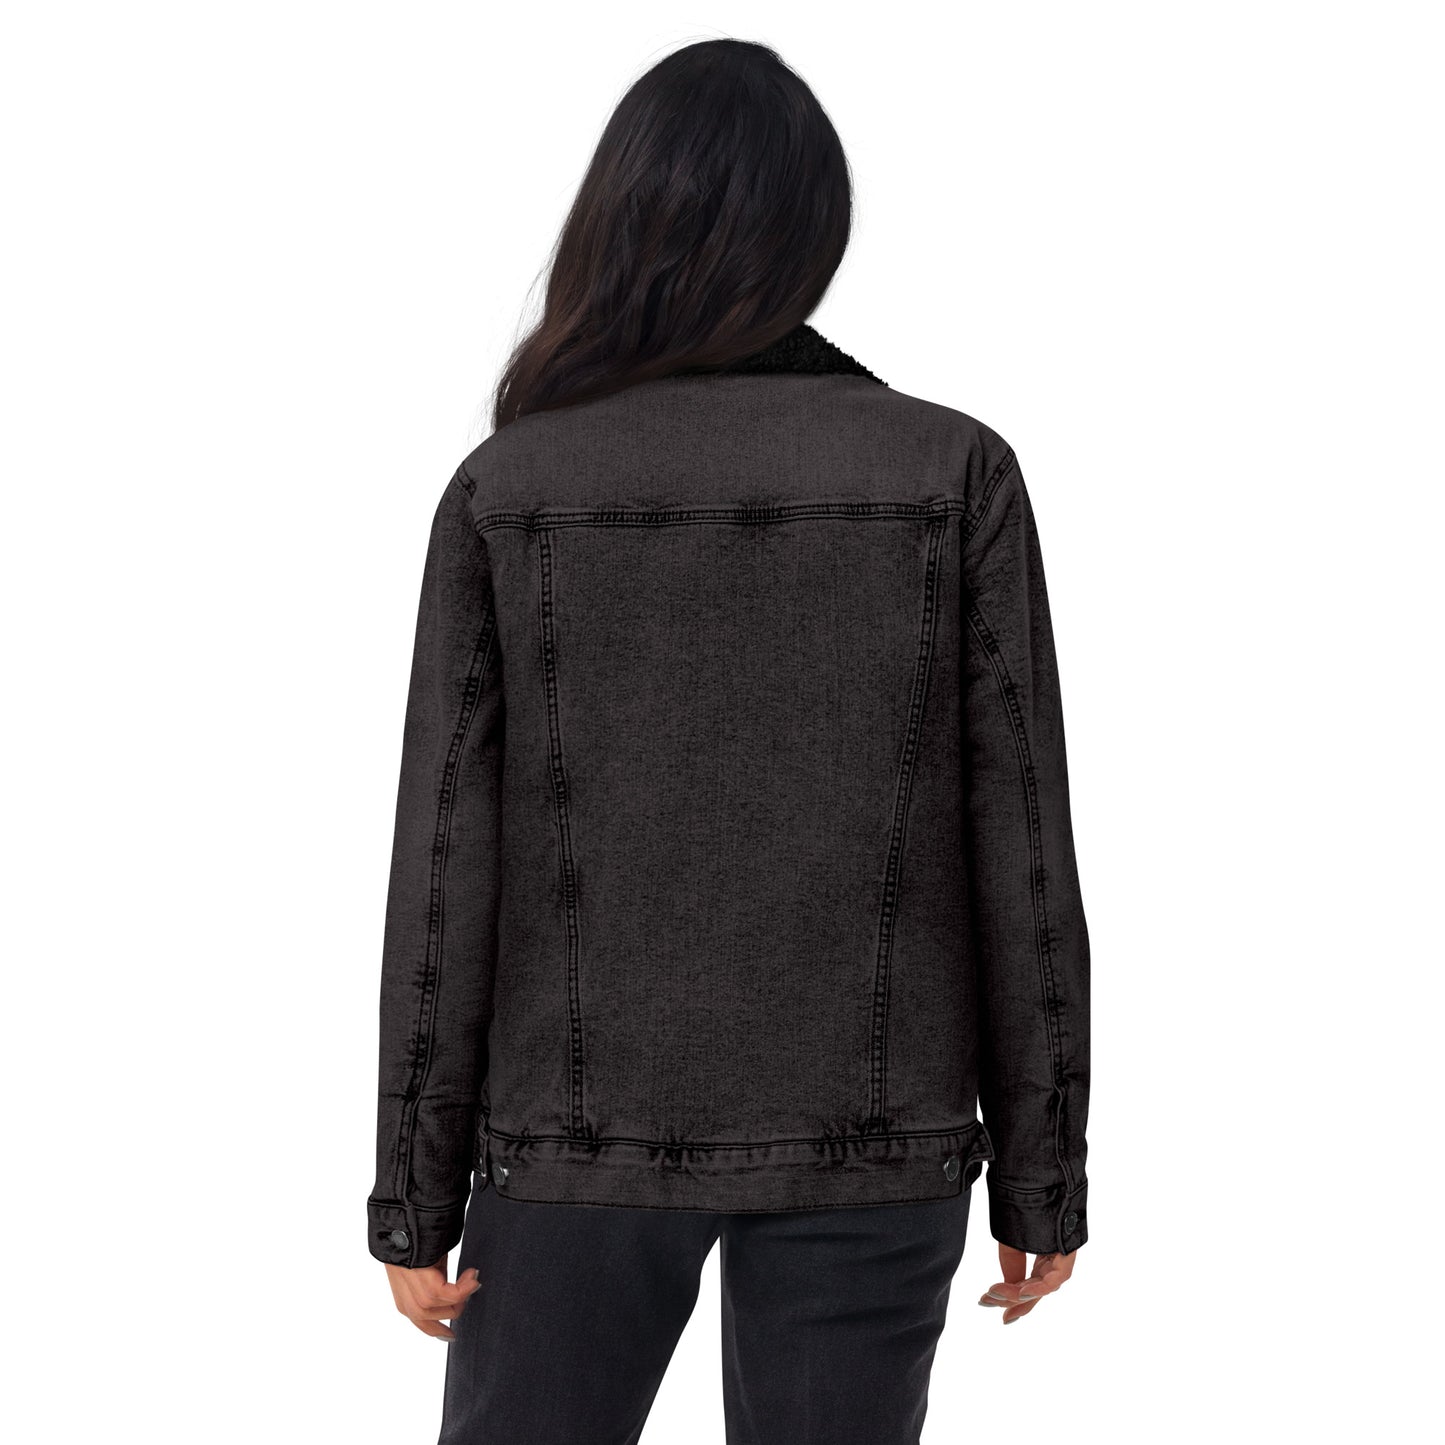 Denim Light & Denim Jacket Black For Women (Glamourange Sherpa Denim Jackets Womens)